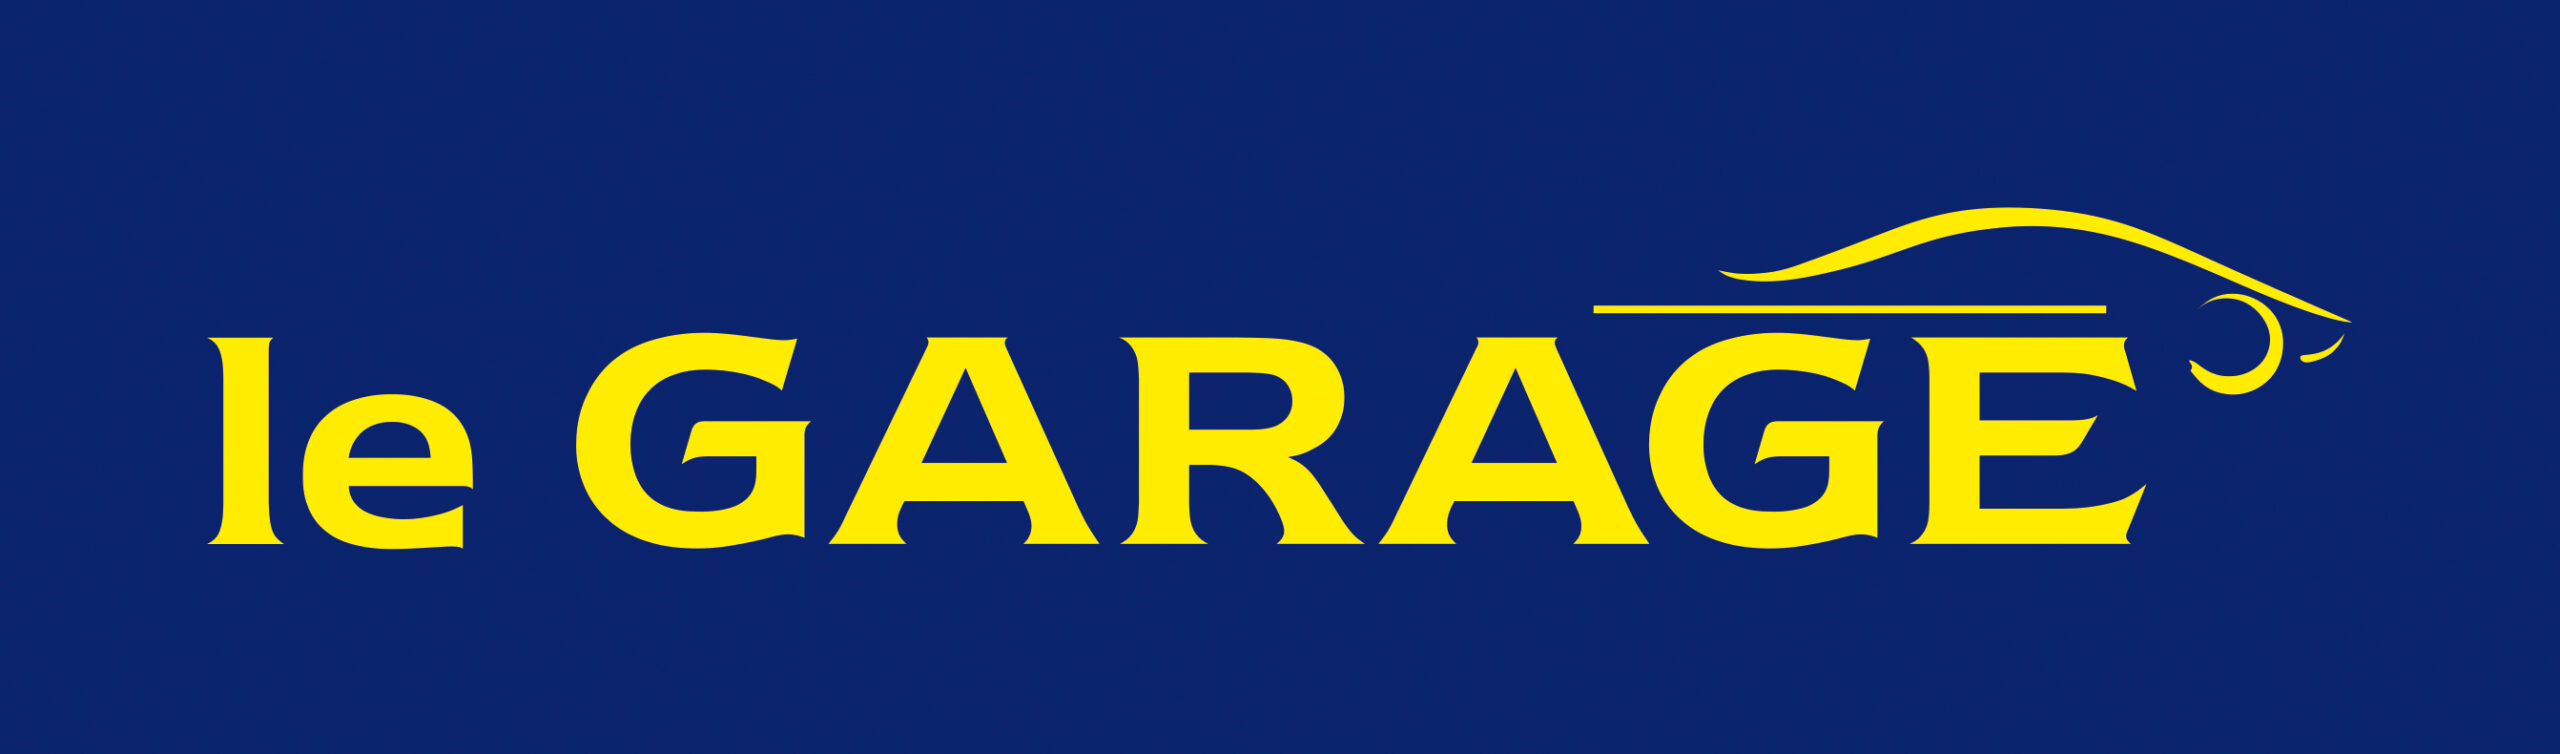 LeGarage-Logo_mit-HG_RGB-scaled.jpg